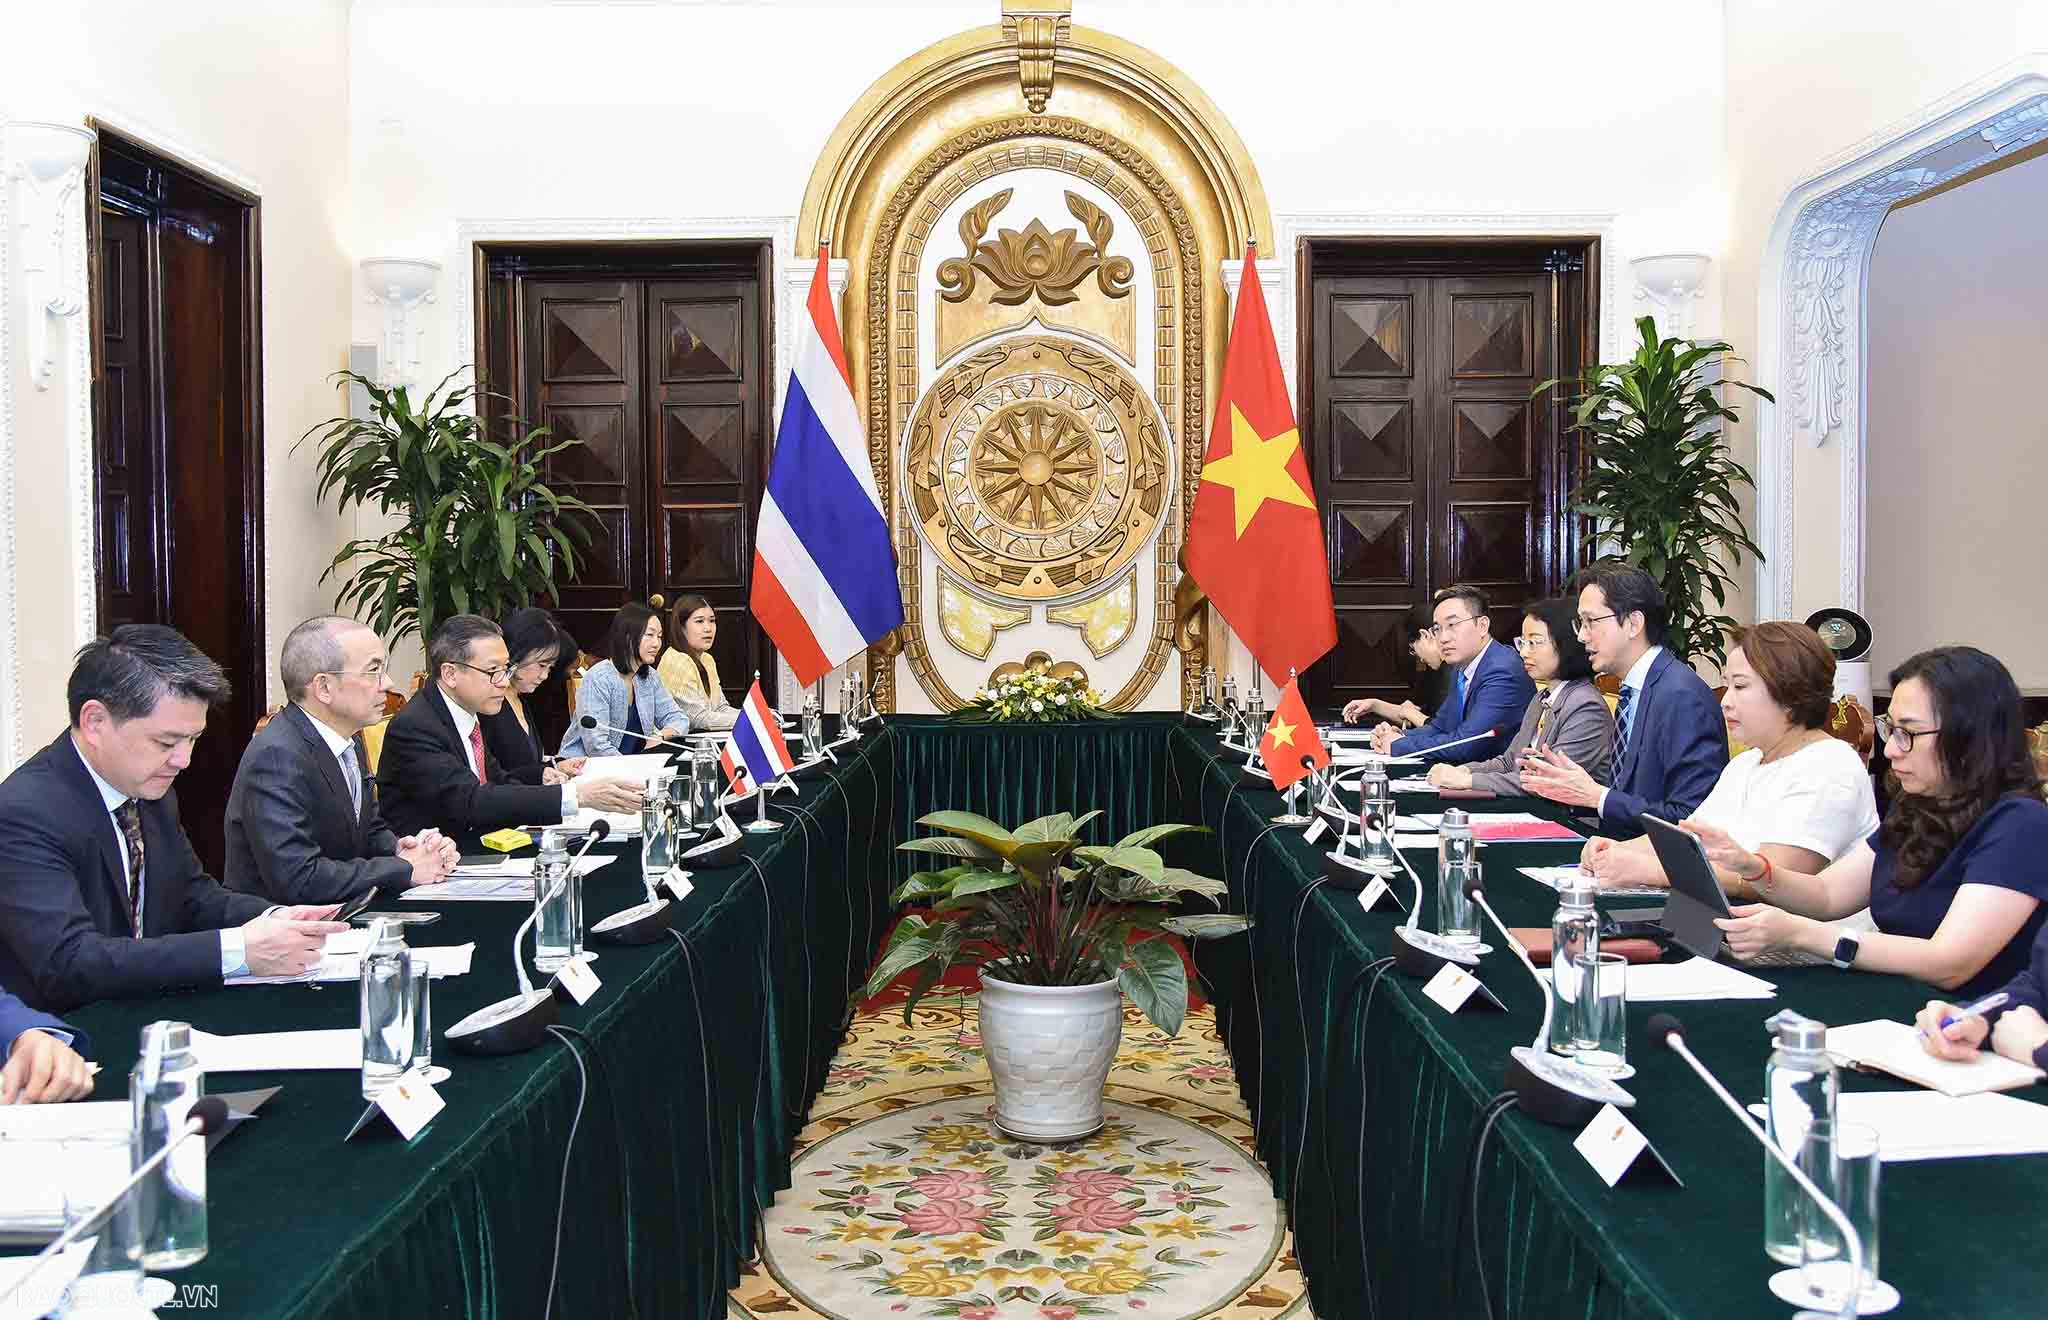 Vietnam, Thailand Foreign Affairs Ministries hold 9th Political Consultation in Hanoi